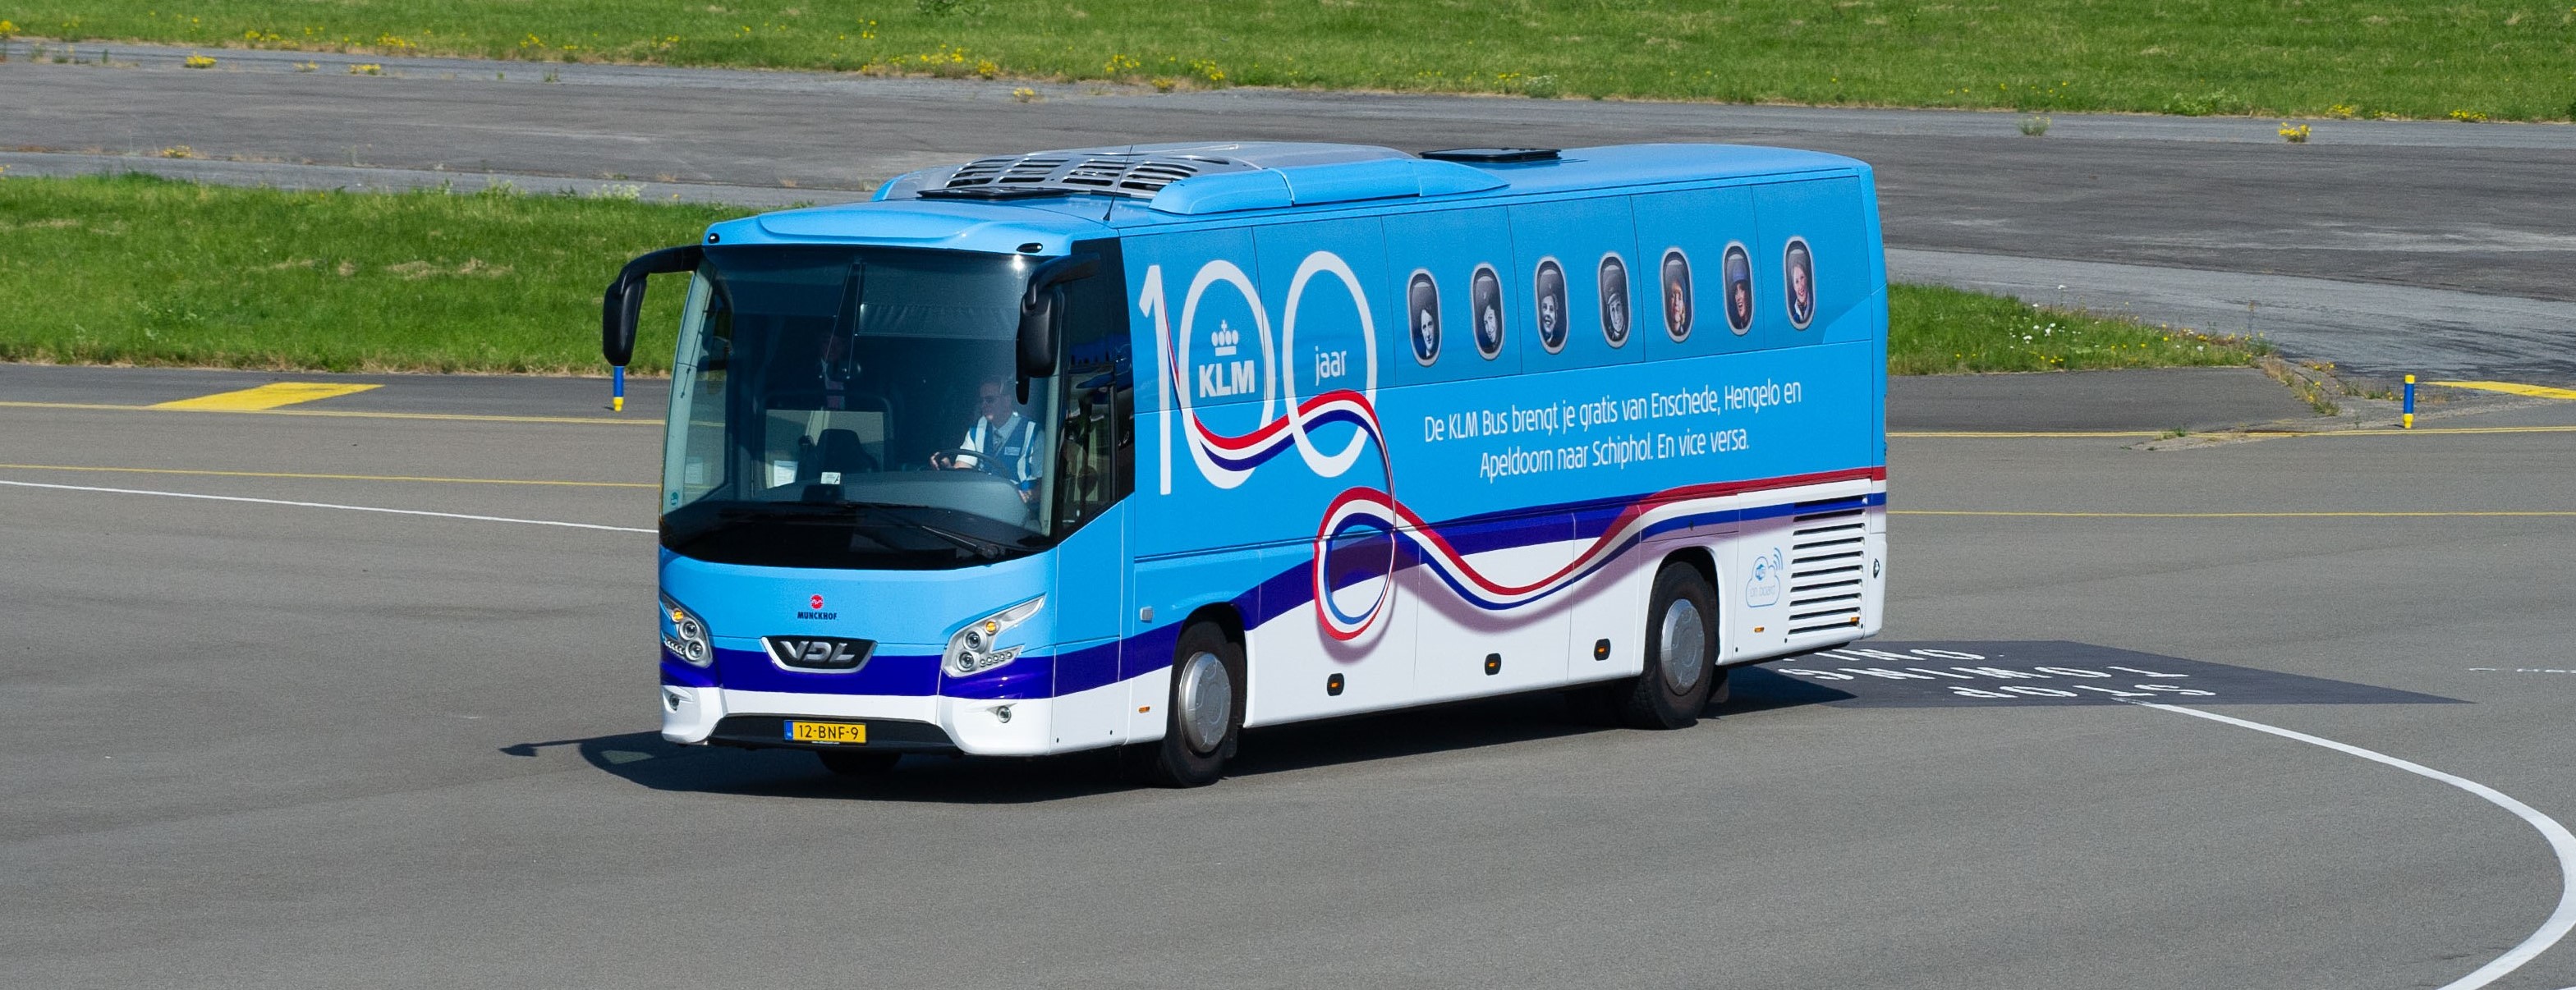 KLM buses reduce one million kilometres of CO2-emissions